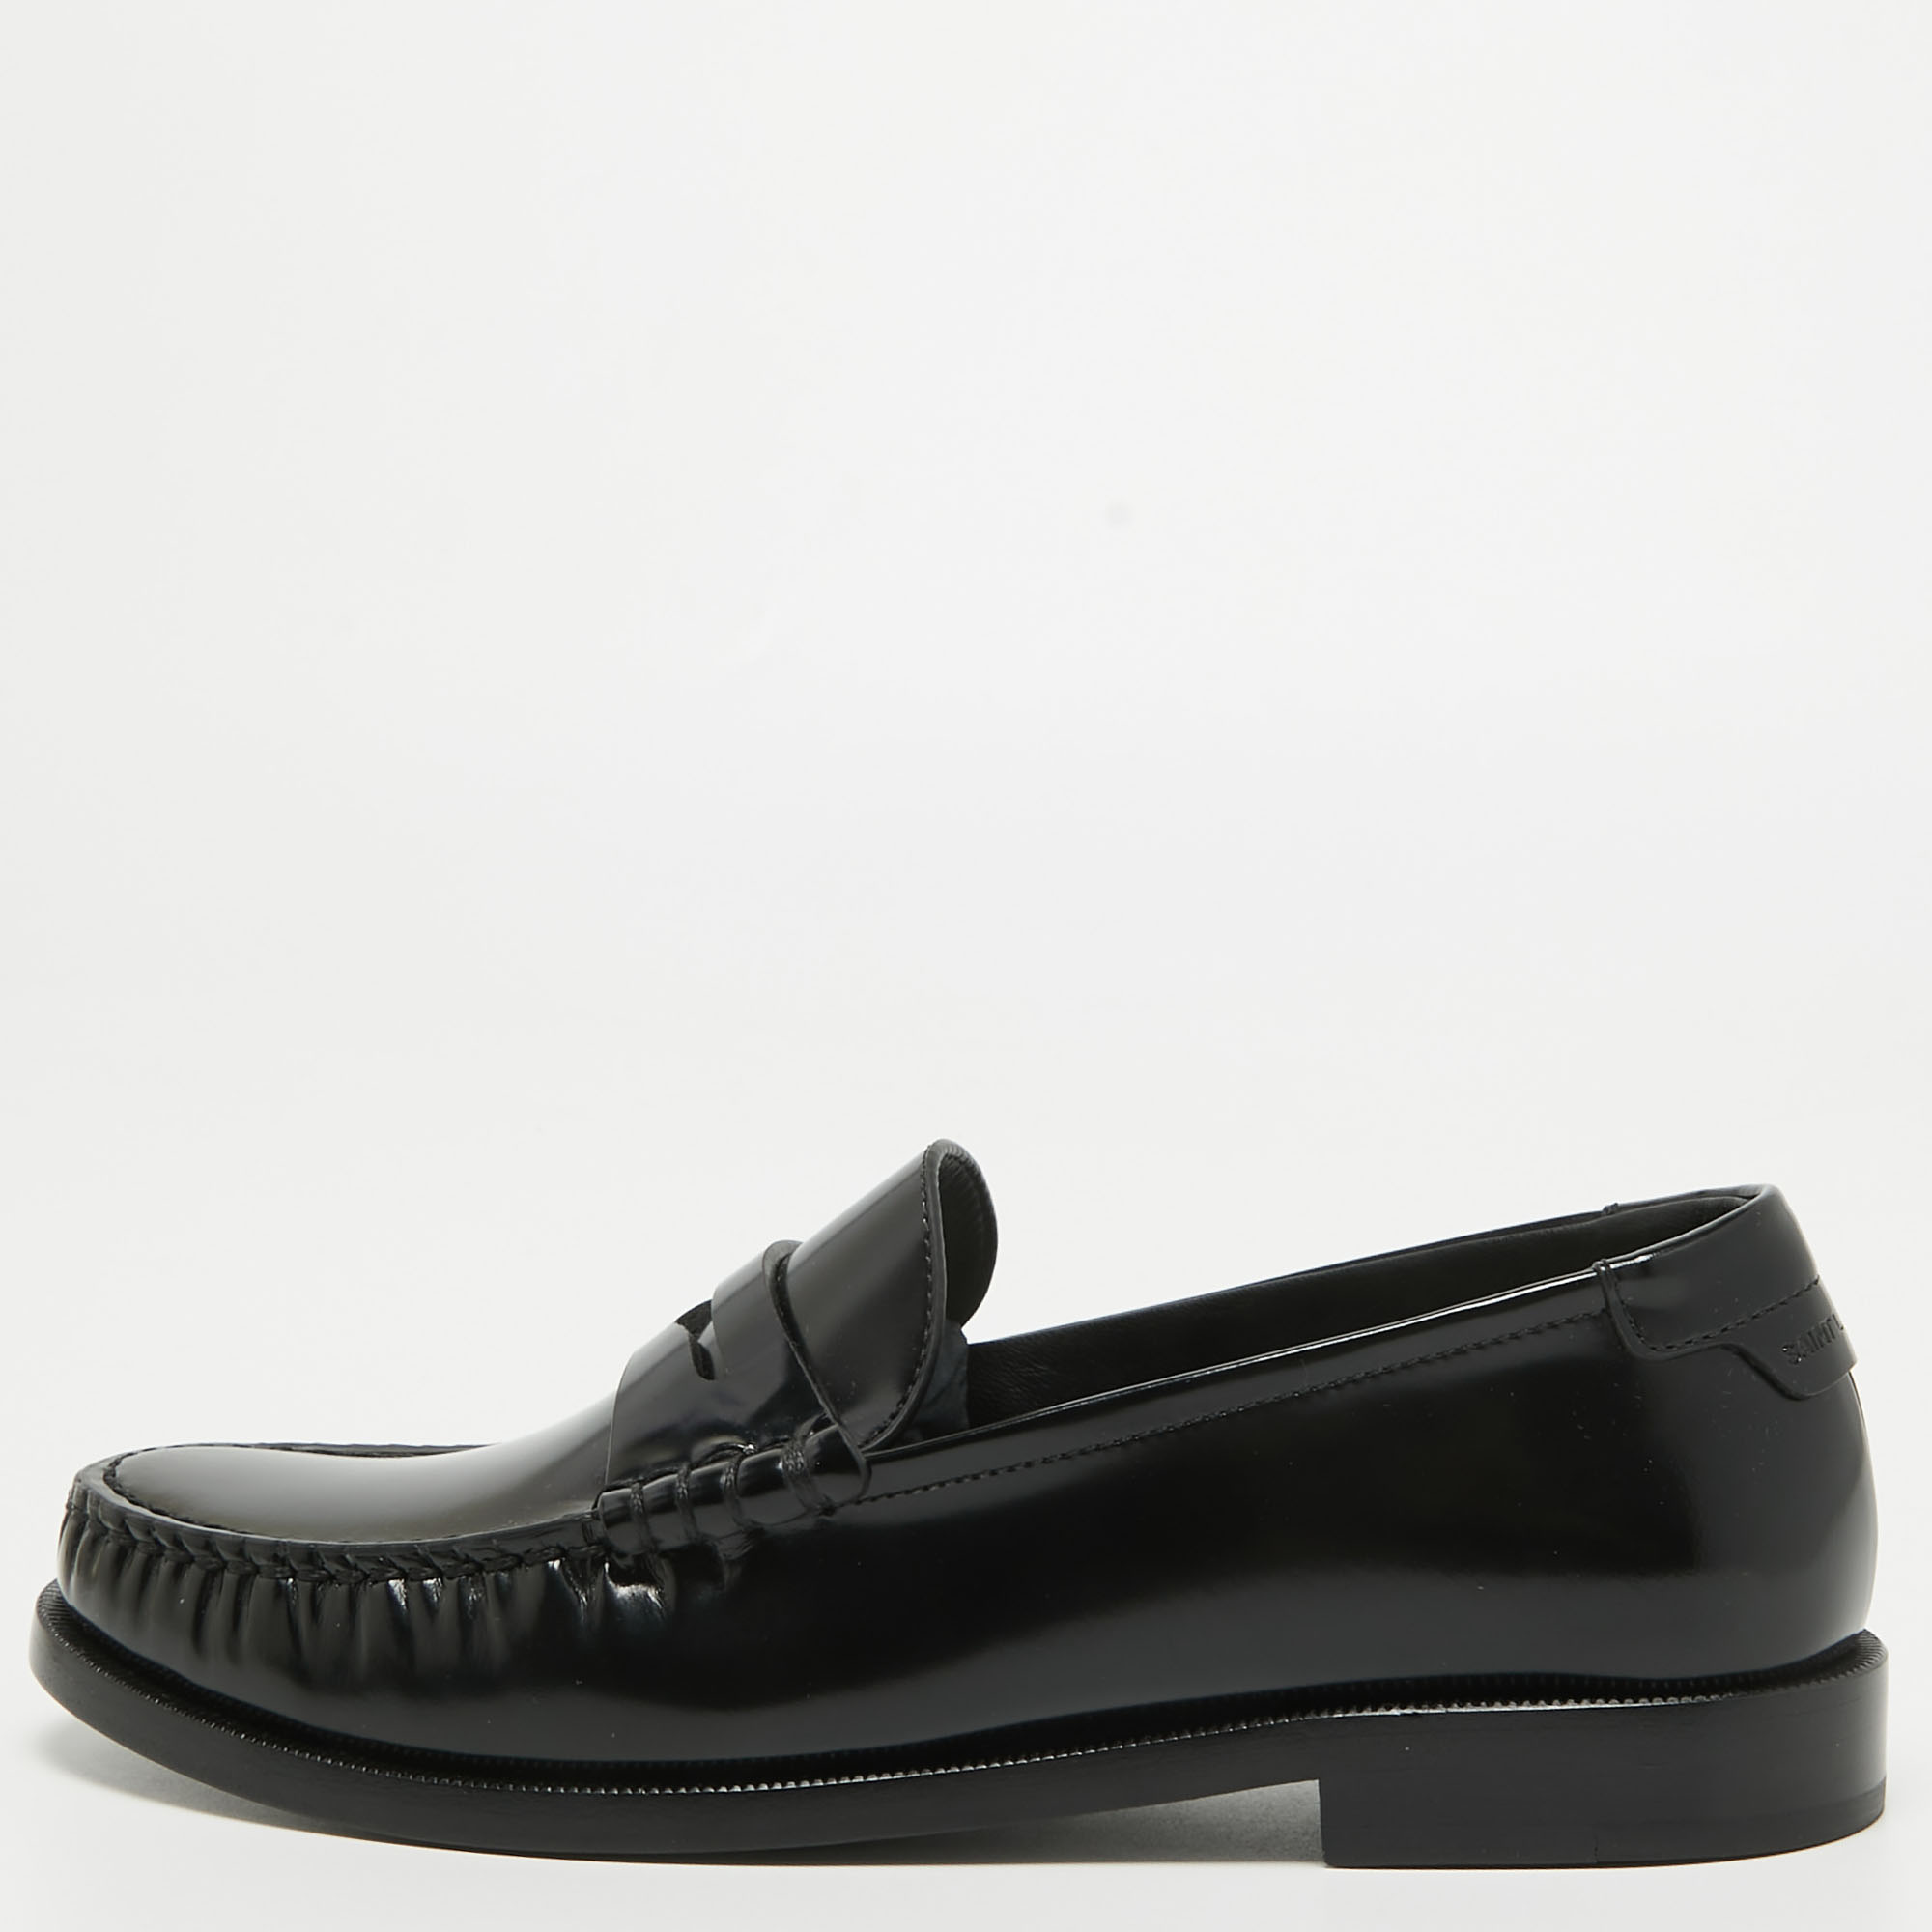 Saint Laurent Black Leather Penny Loafers Size 37